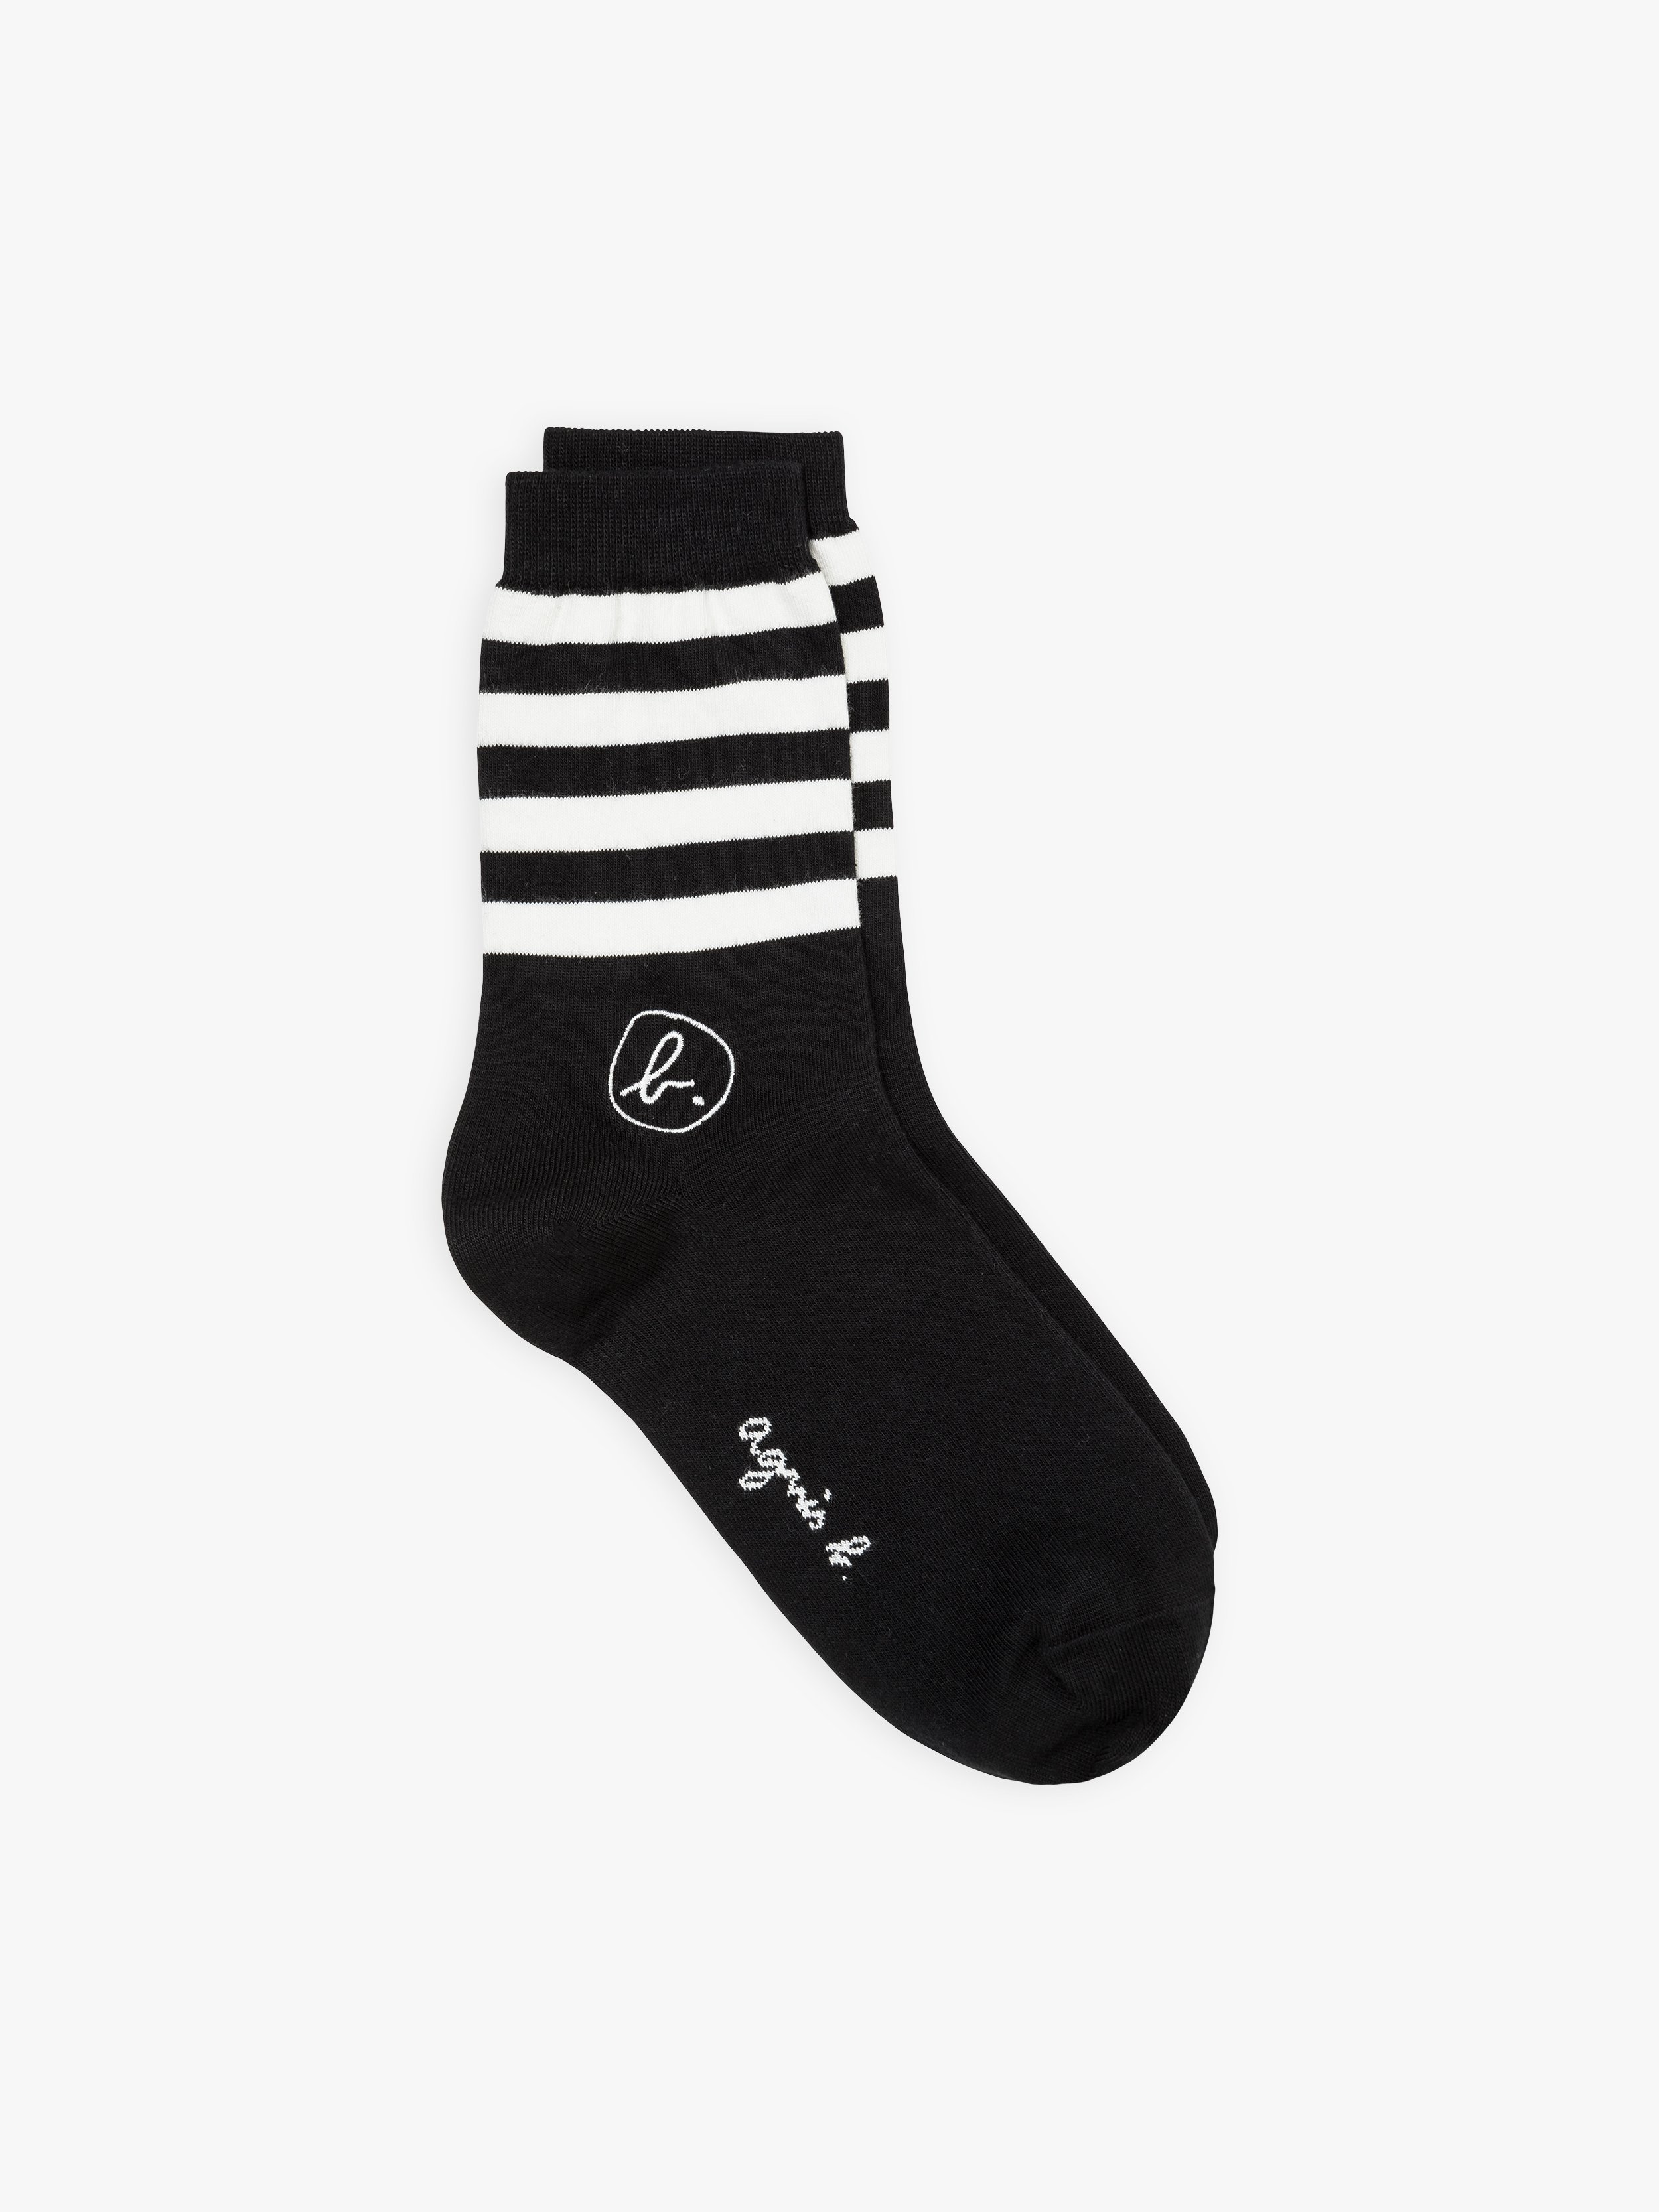 black and white striped logo socks | agnès b.